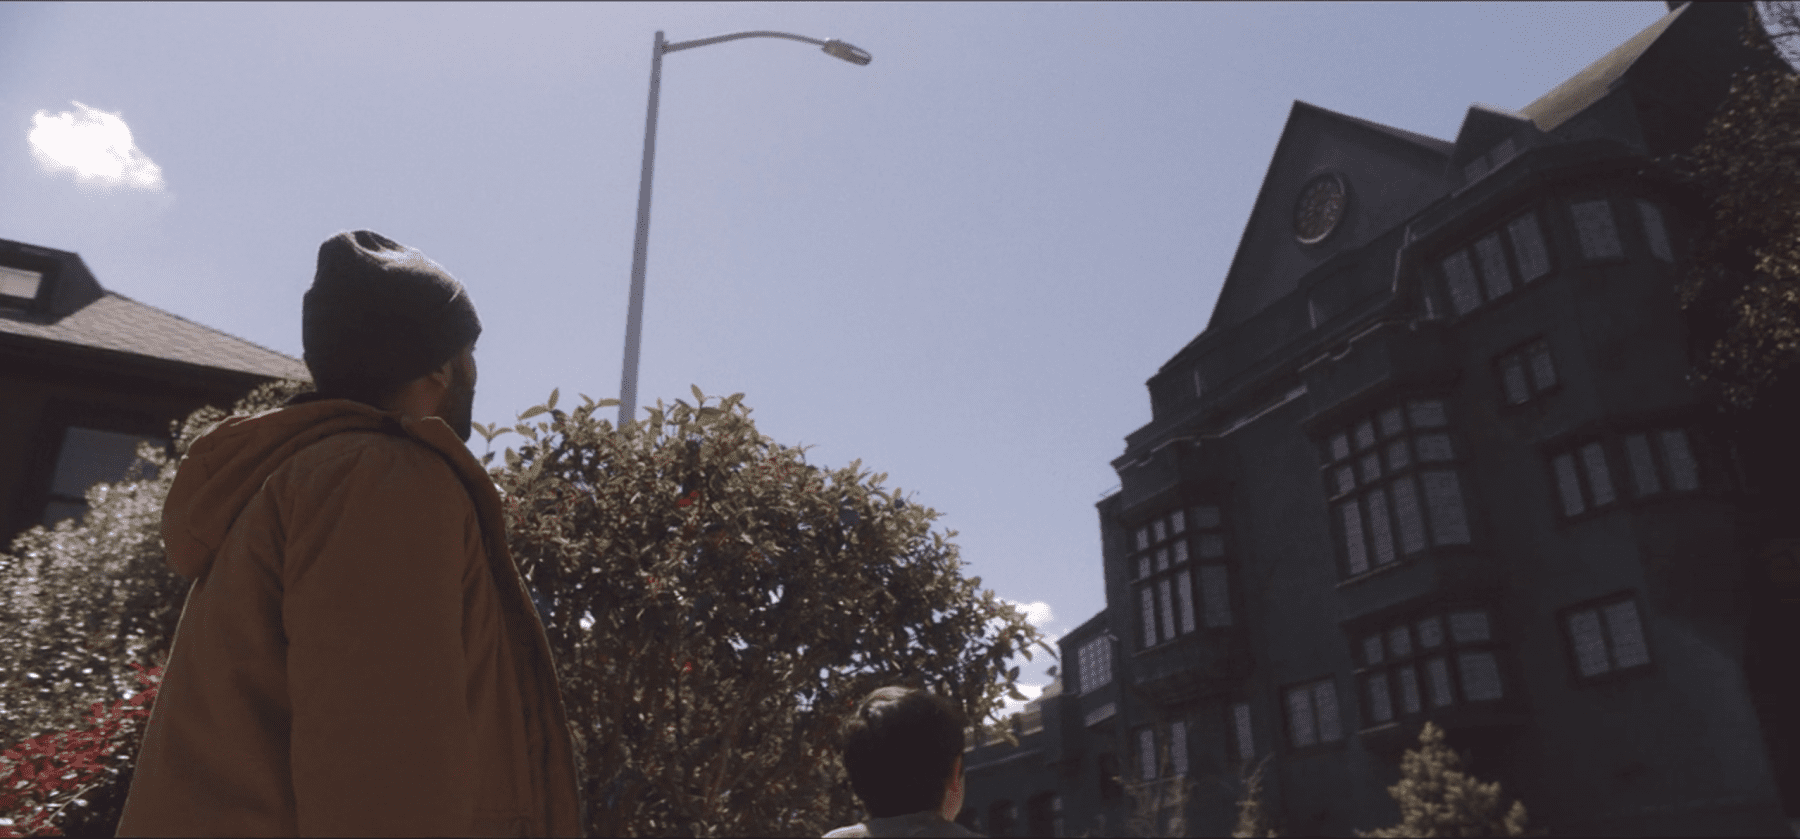 Karim Washington (Kingsley Ben-Adir) looks at a house in season 2 of The OA